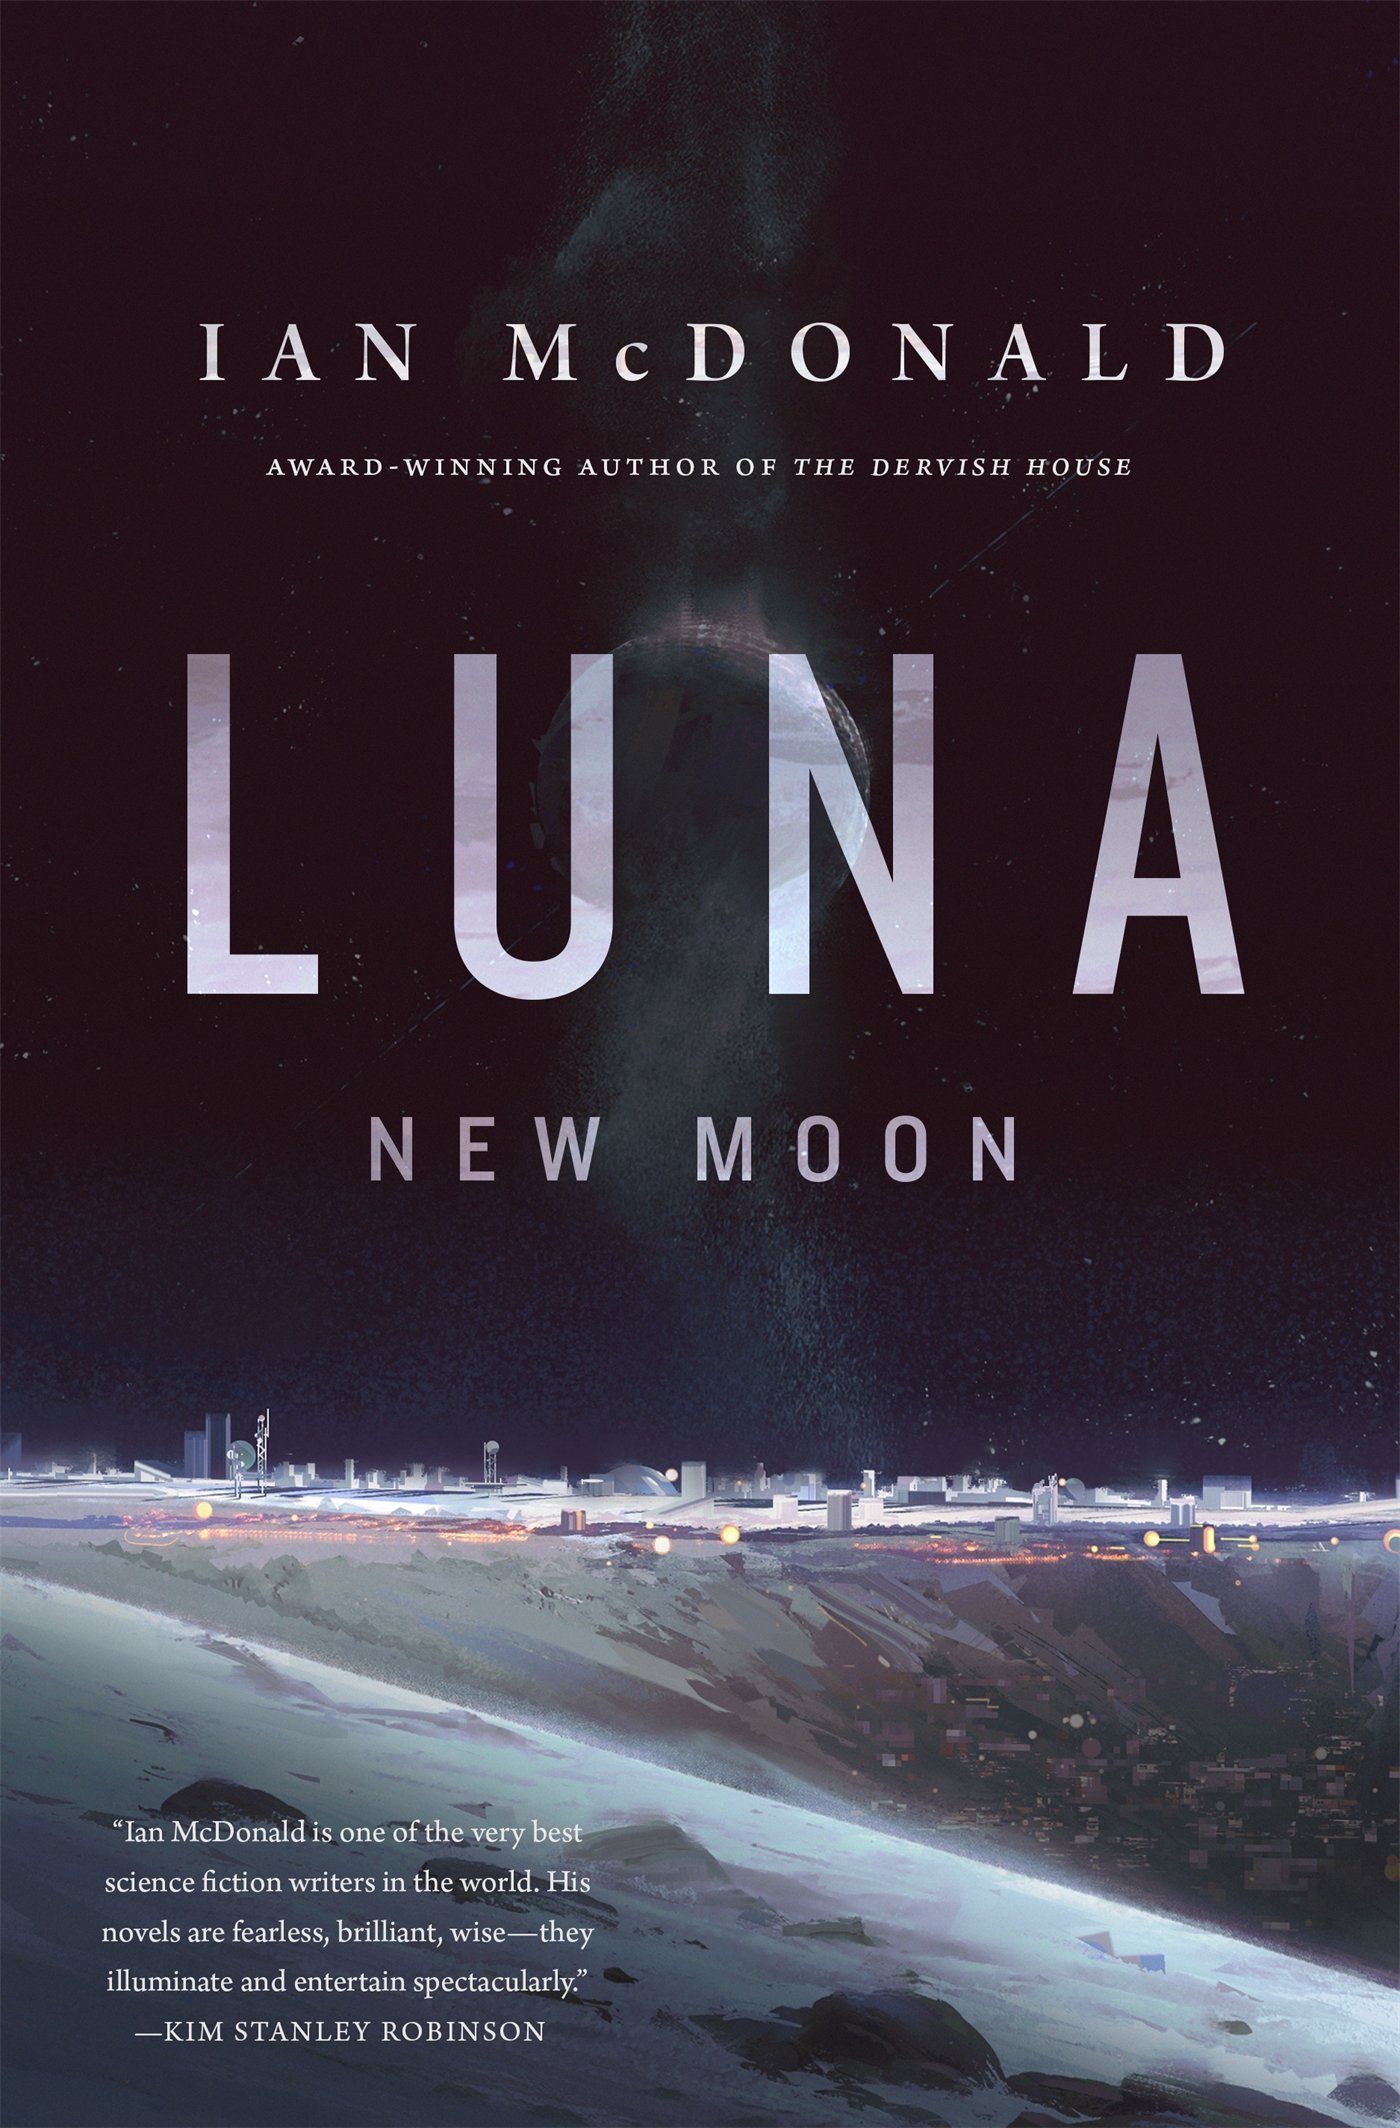 Download New Moon PDF by Ian McDonald